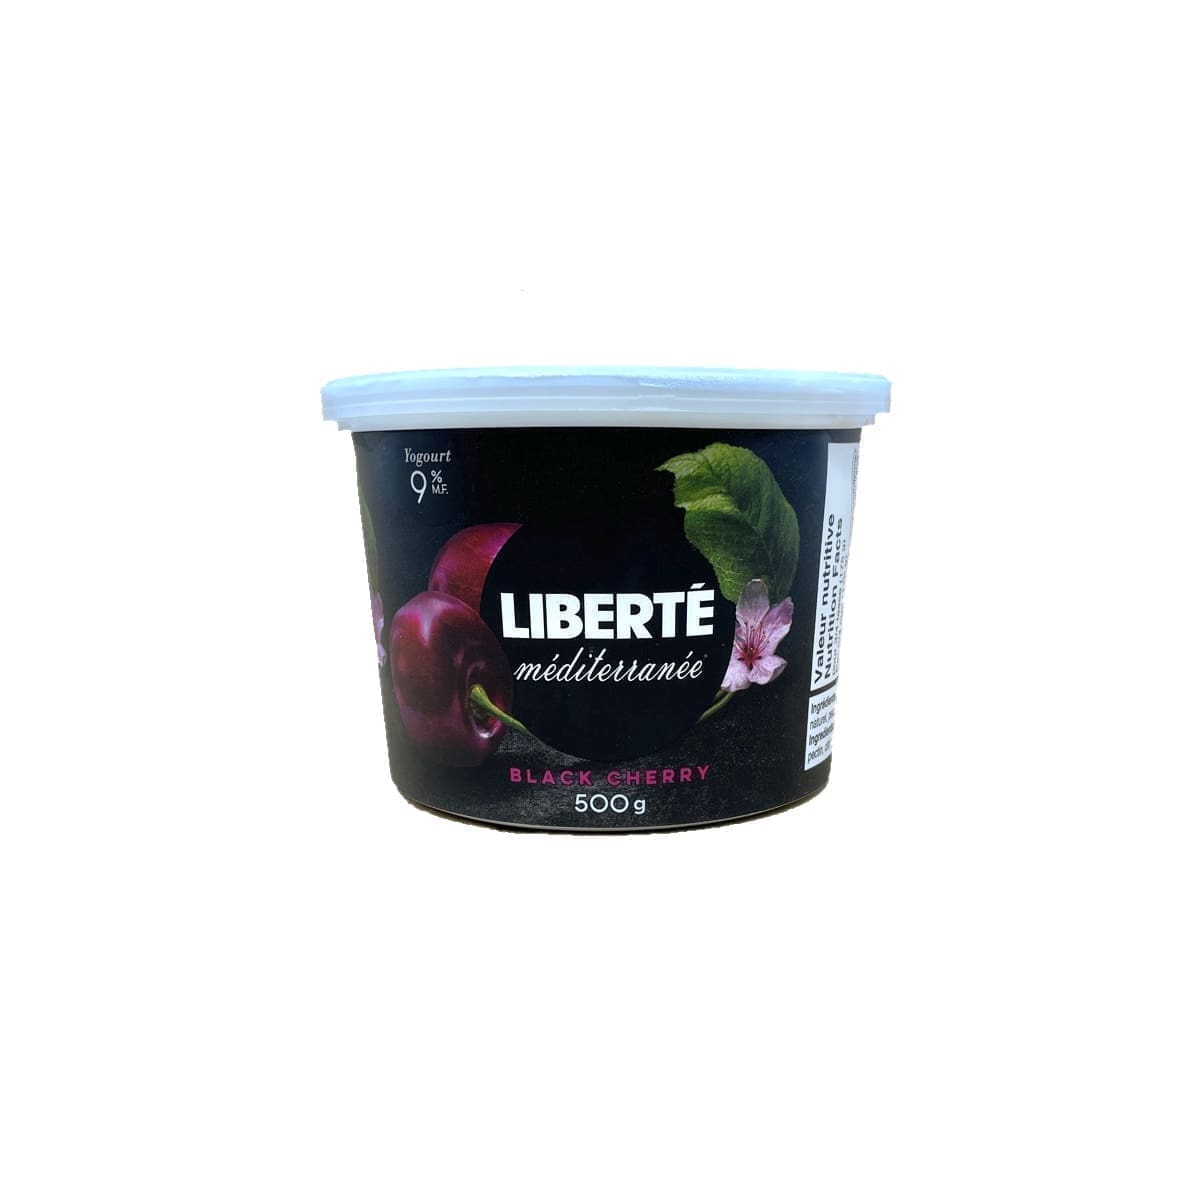 Liberte Mediterranee Yogurt Black Cherry 9% (500g)